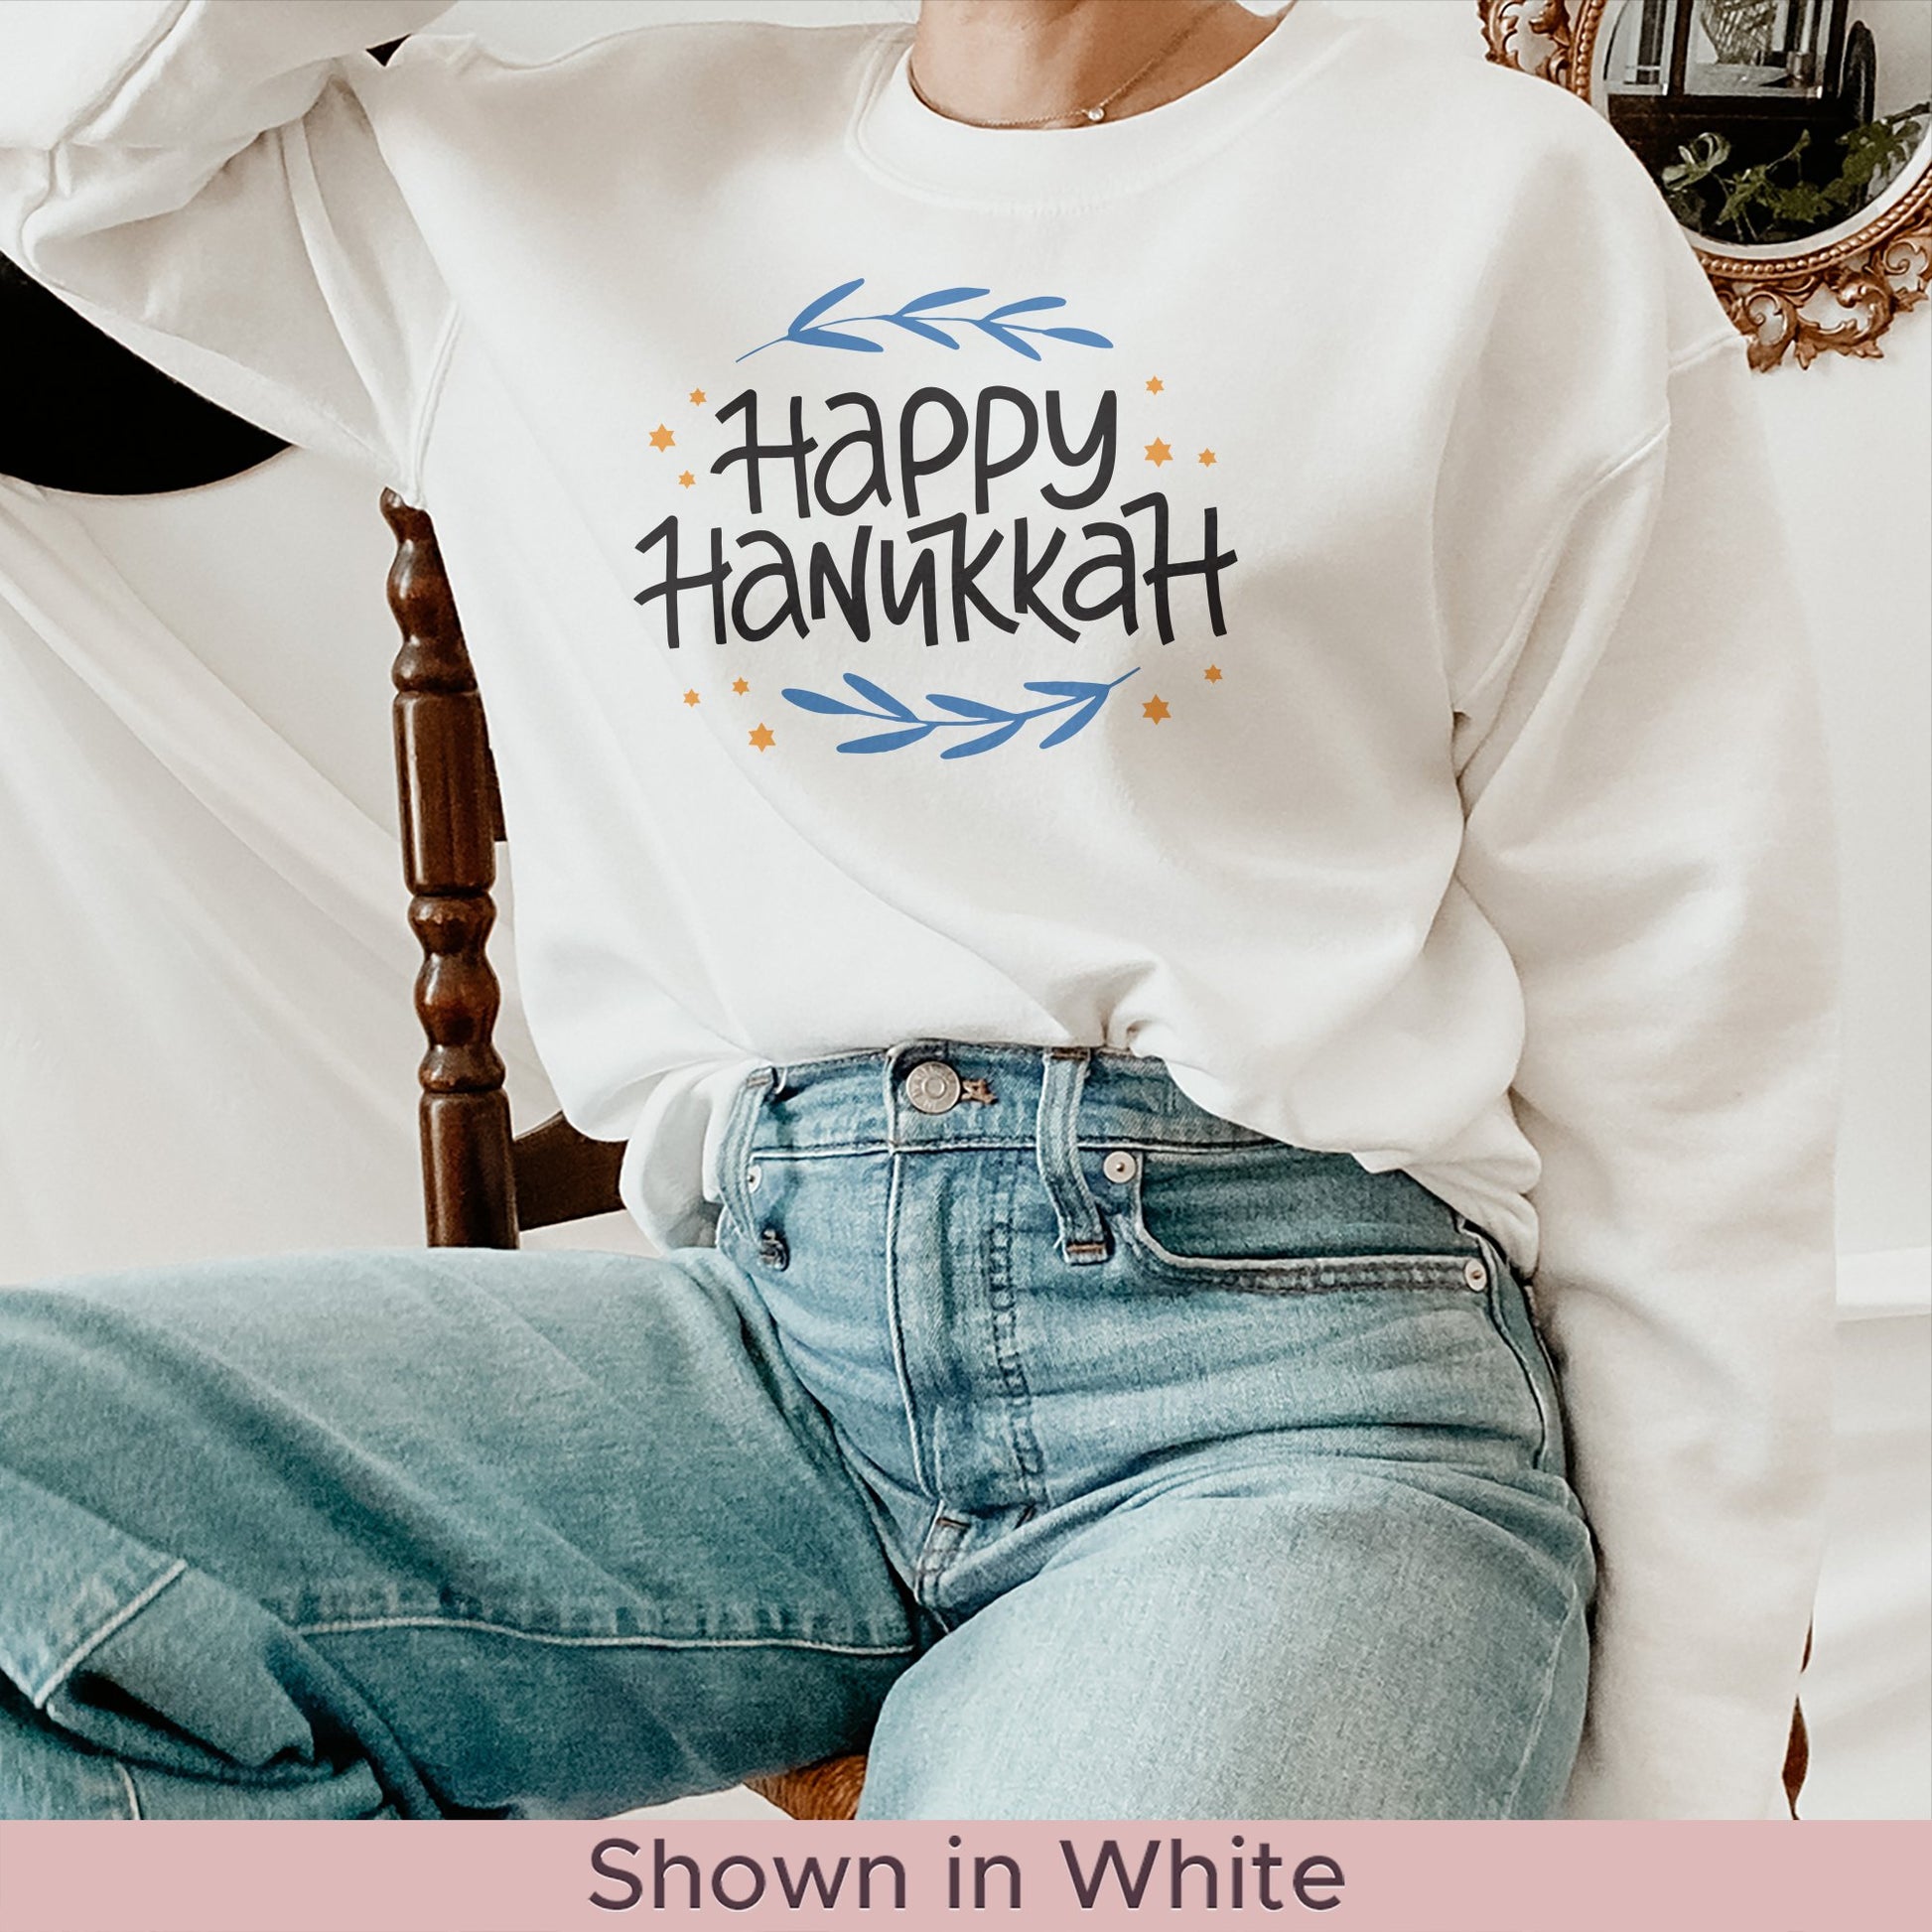 Hanukkah Sweatshirt, Happy Hannukkah - Mardonyx Sweatshirt S / White